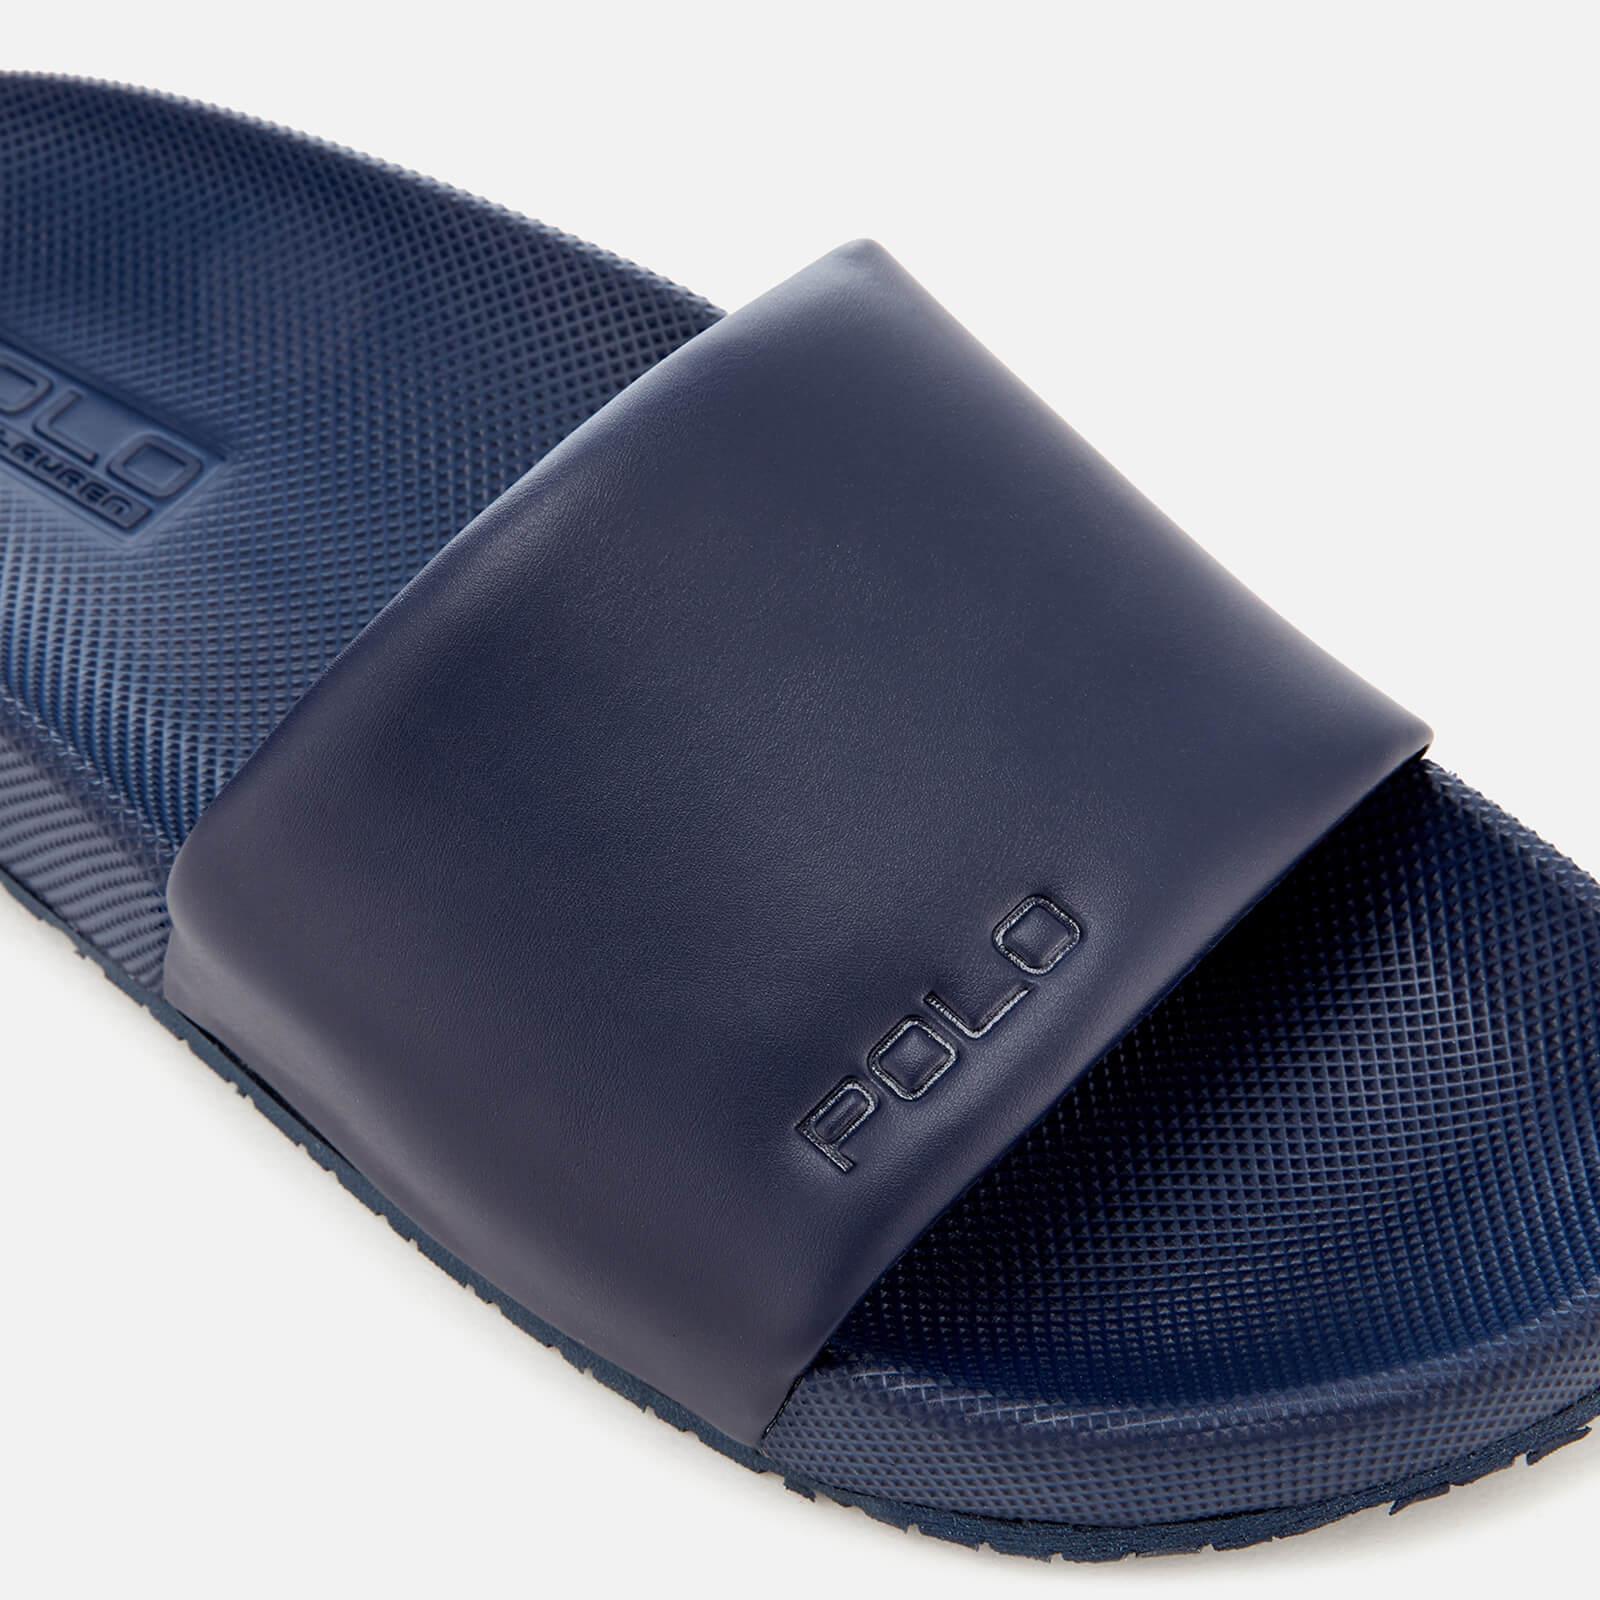 cayson pool slide sandal